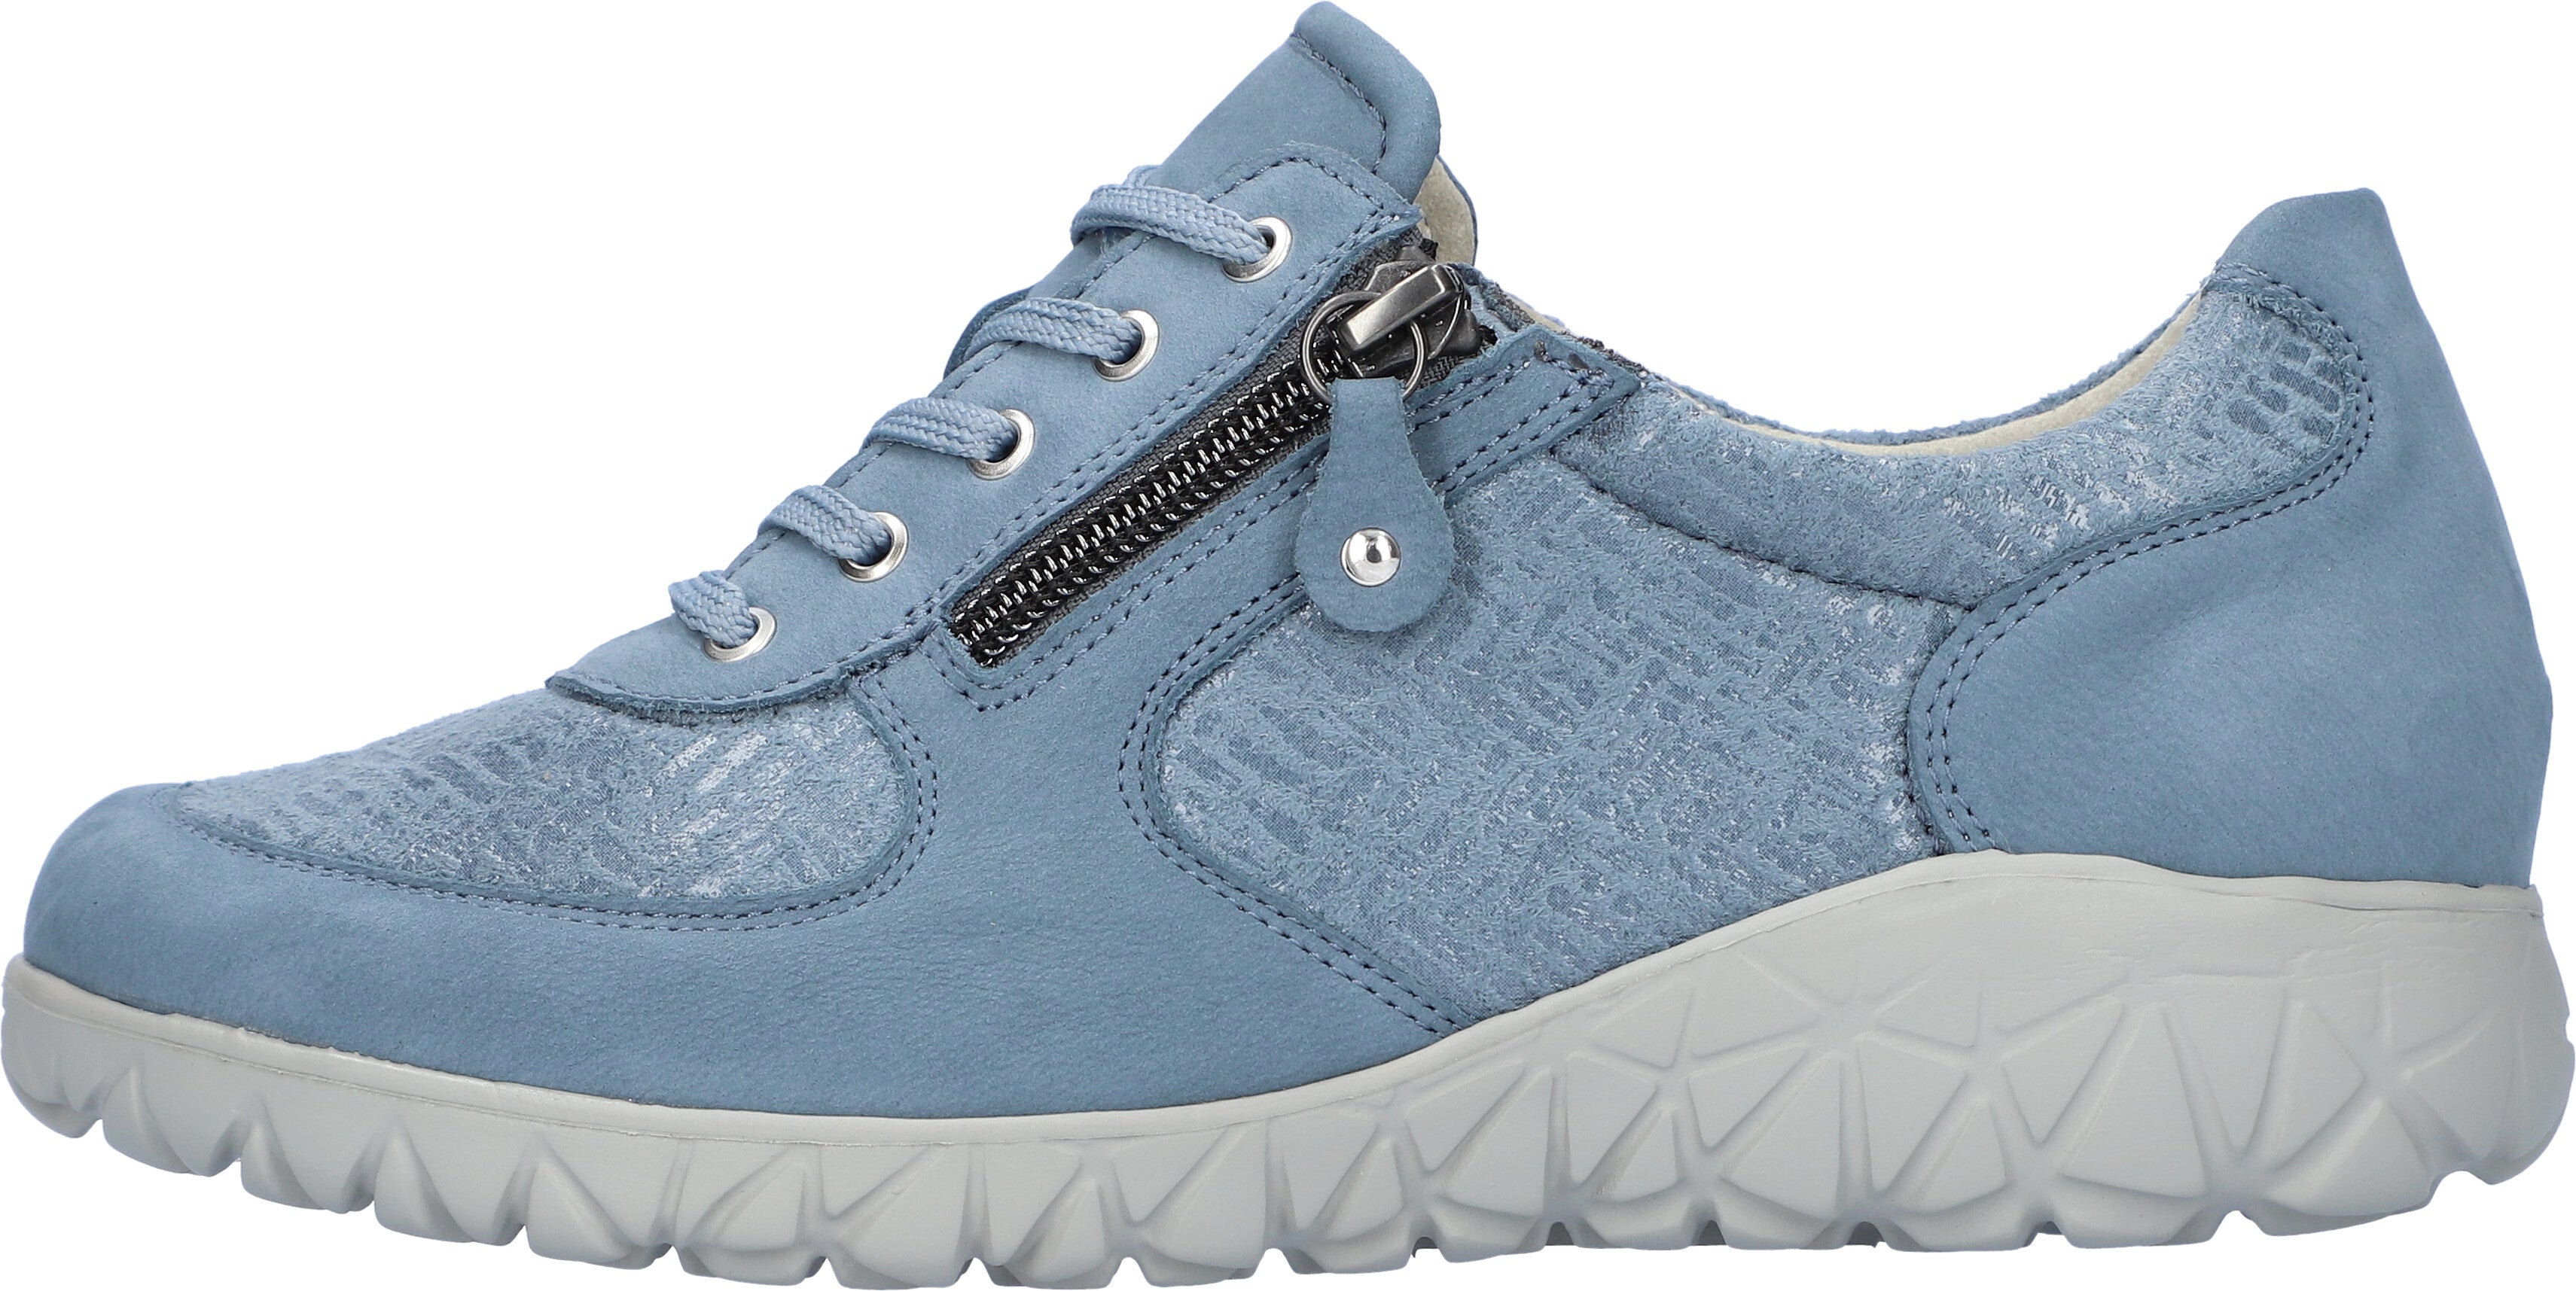 Waldlaufer H89001 227 263 Havy Soft Ladies Denim Blue Nubuck Arch Support Slip On Shoes